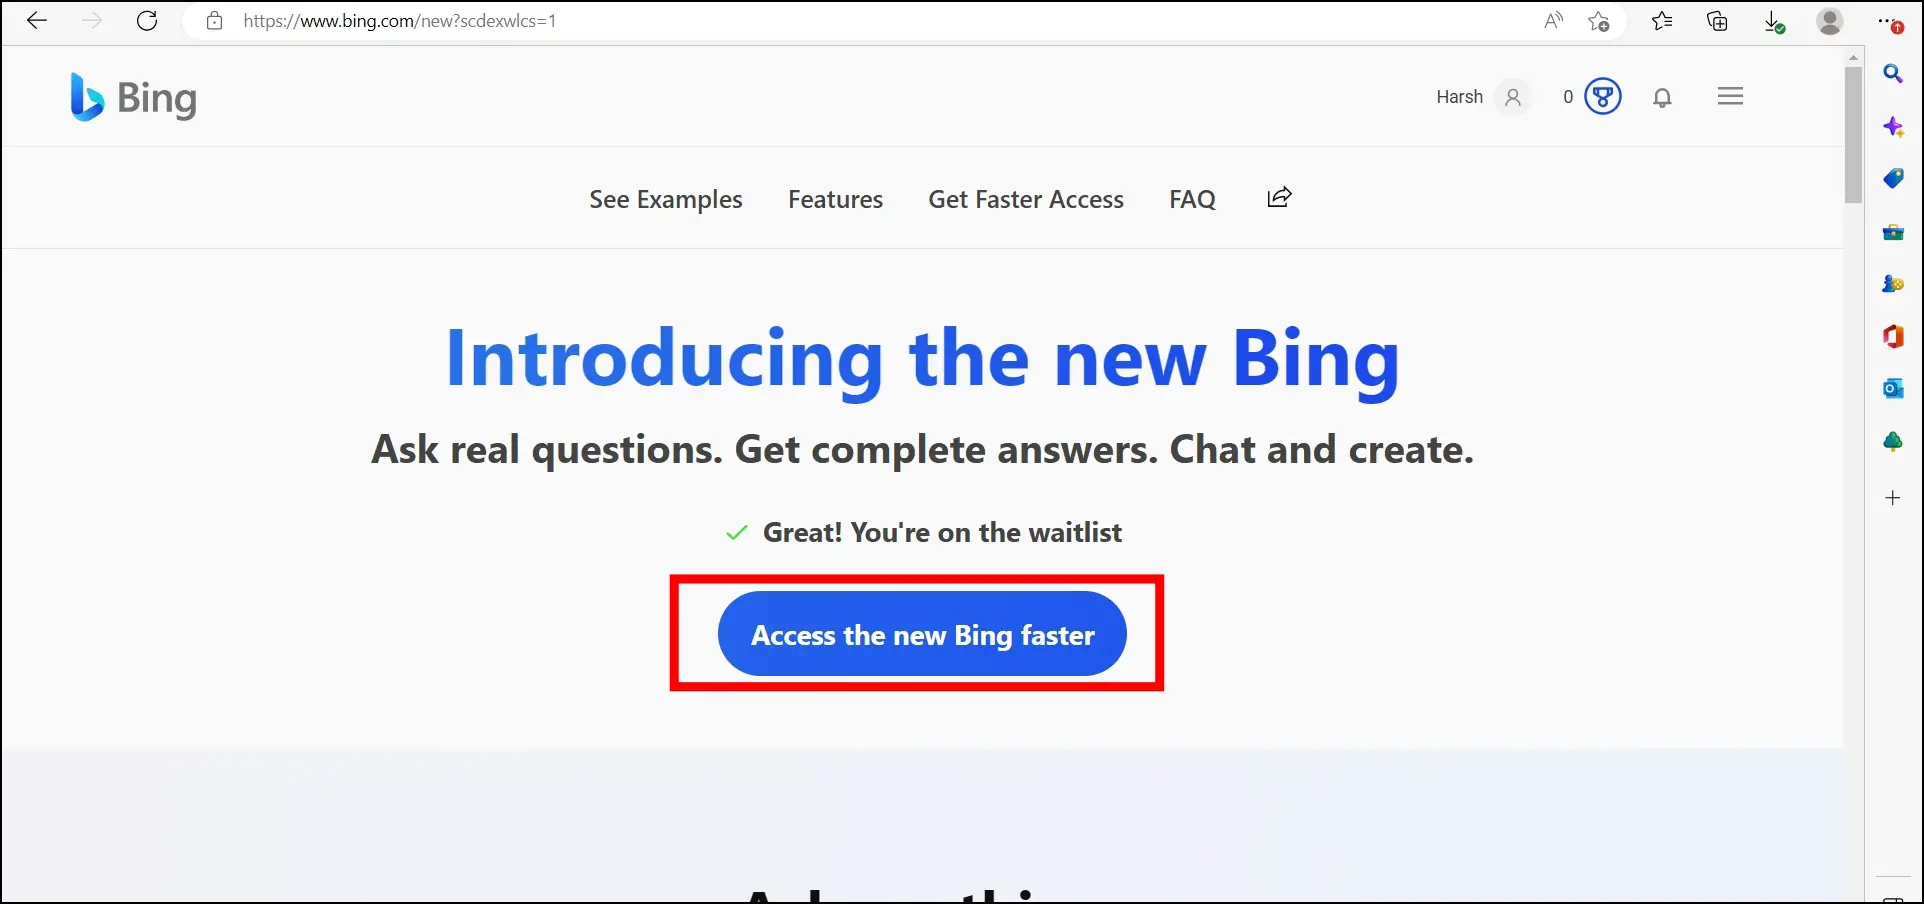 How to Use Microsoft Bing AI Search?